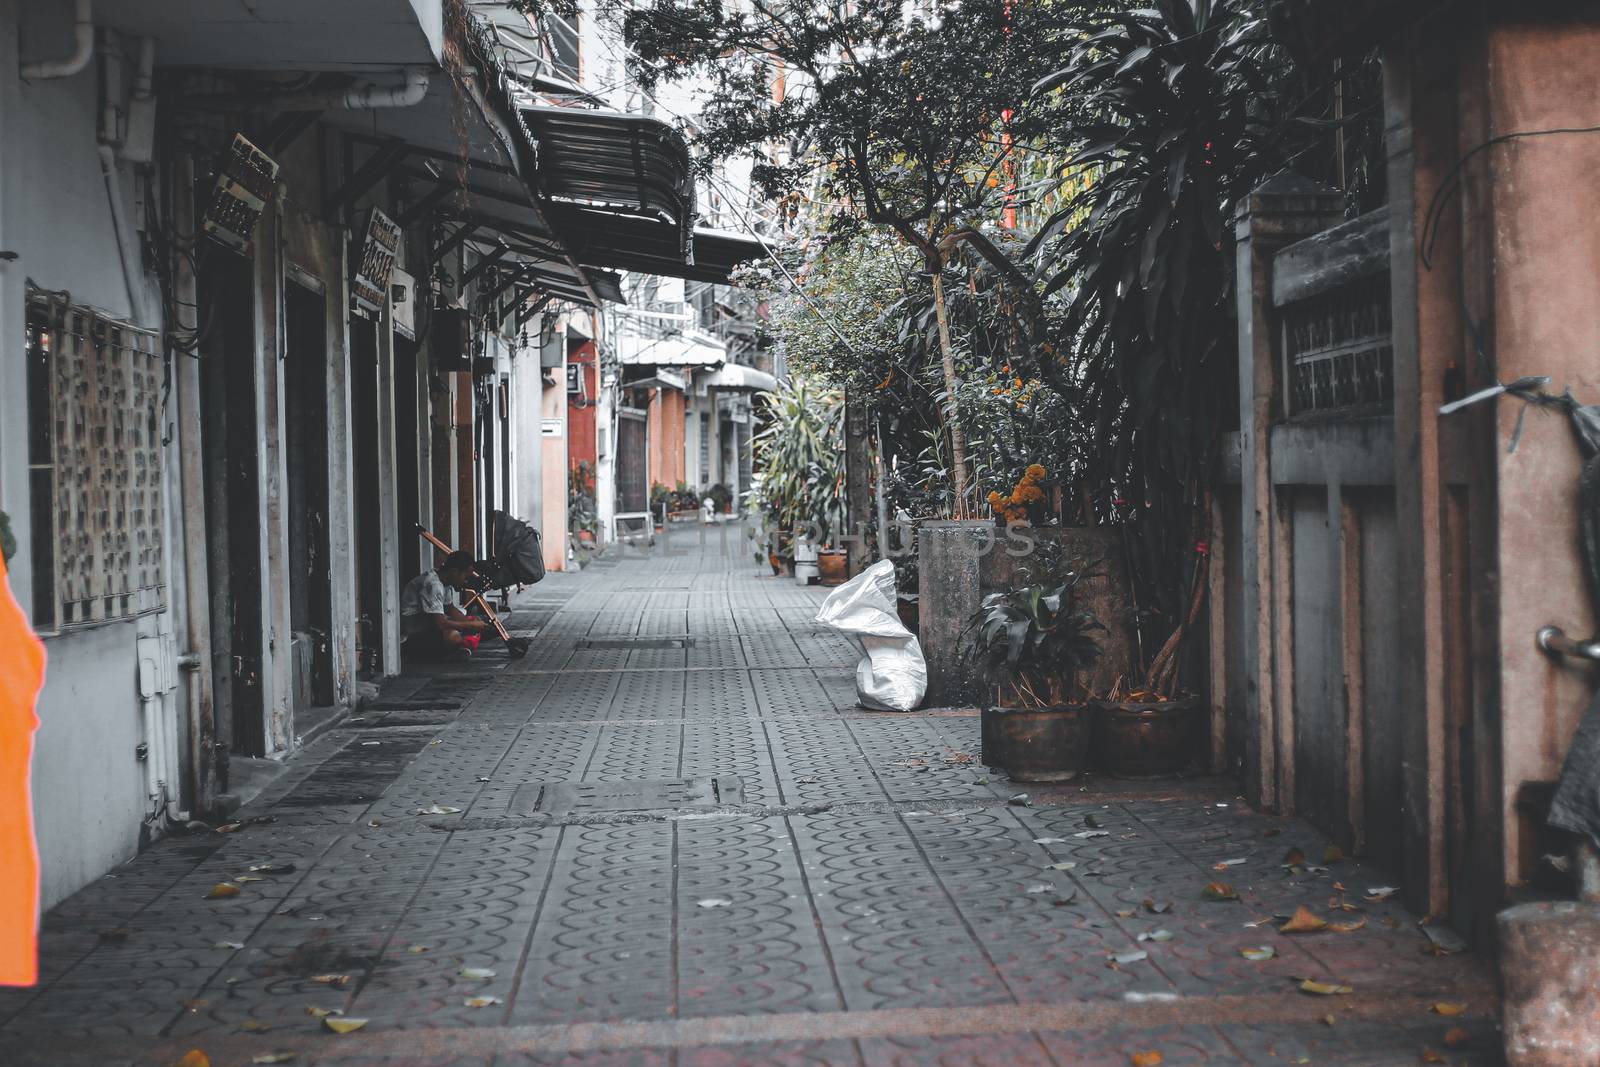 Deserted Alleyways of Chinatown in Bangkok by Sonnet15